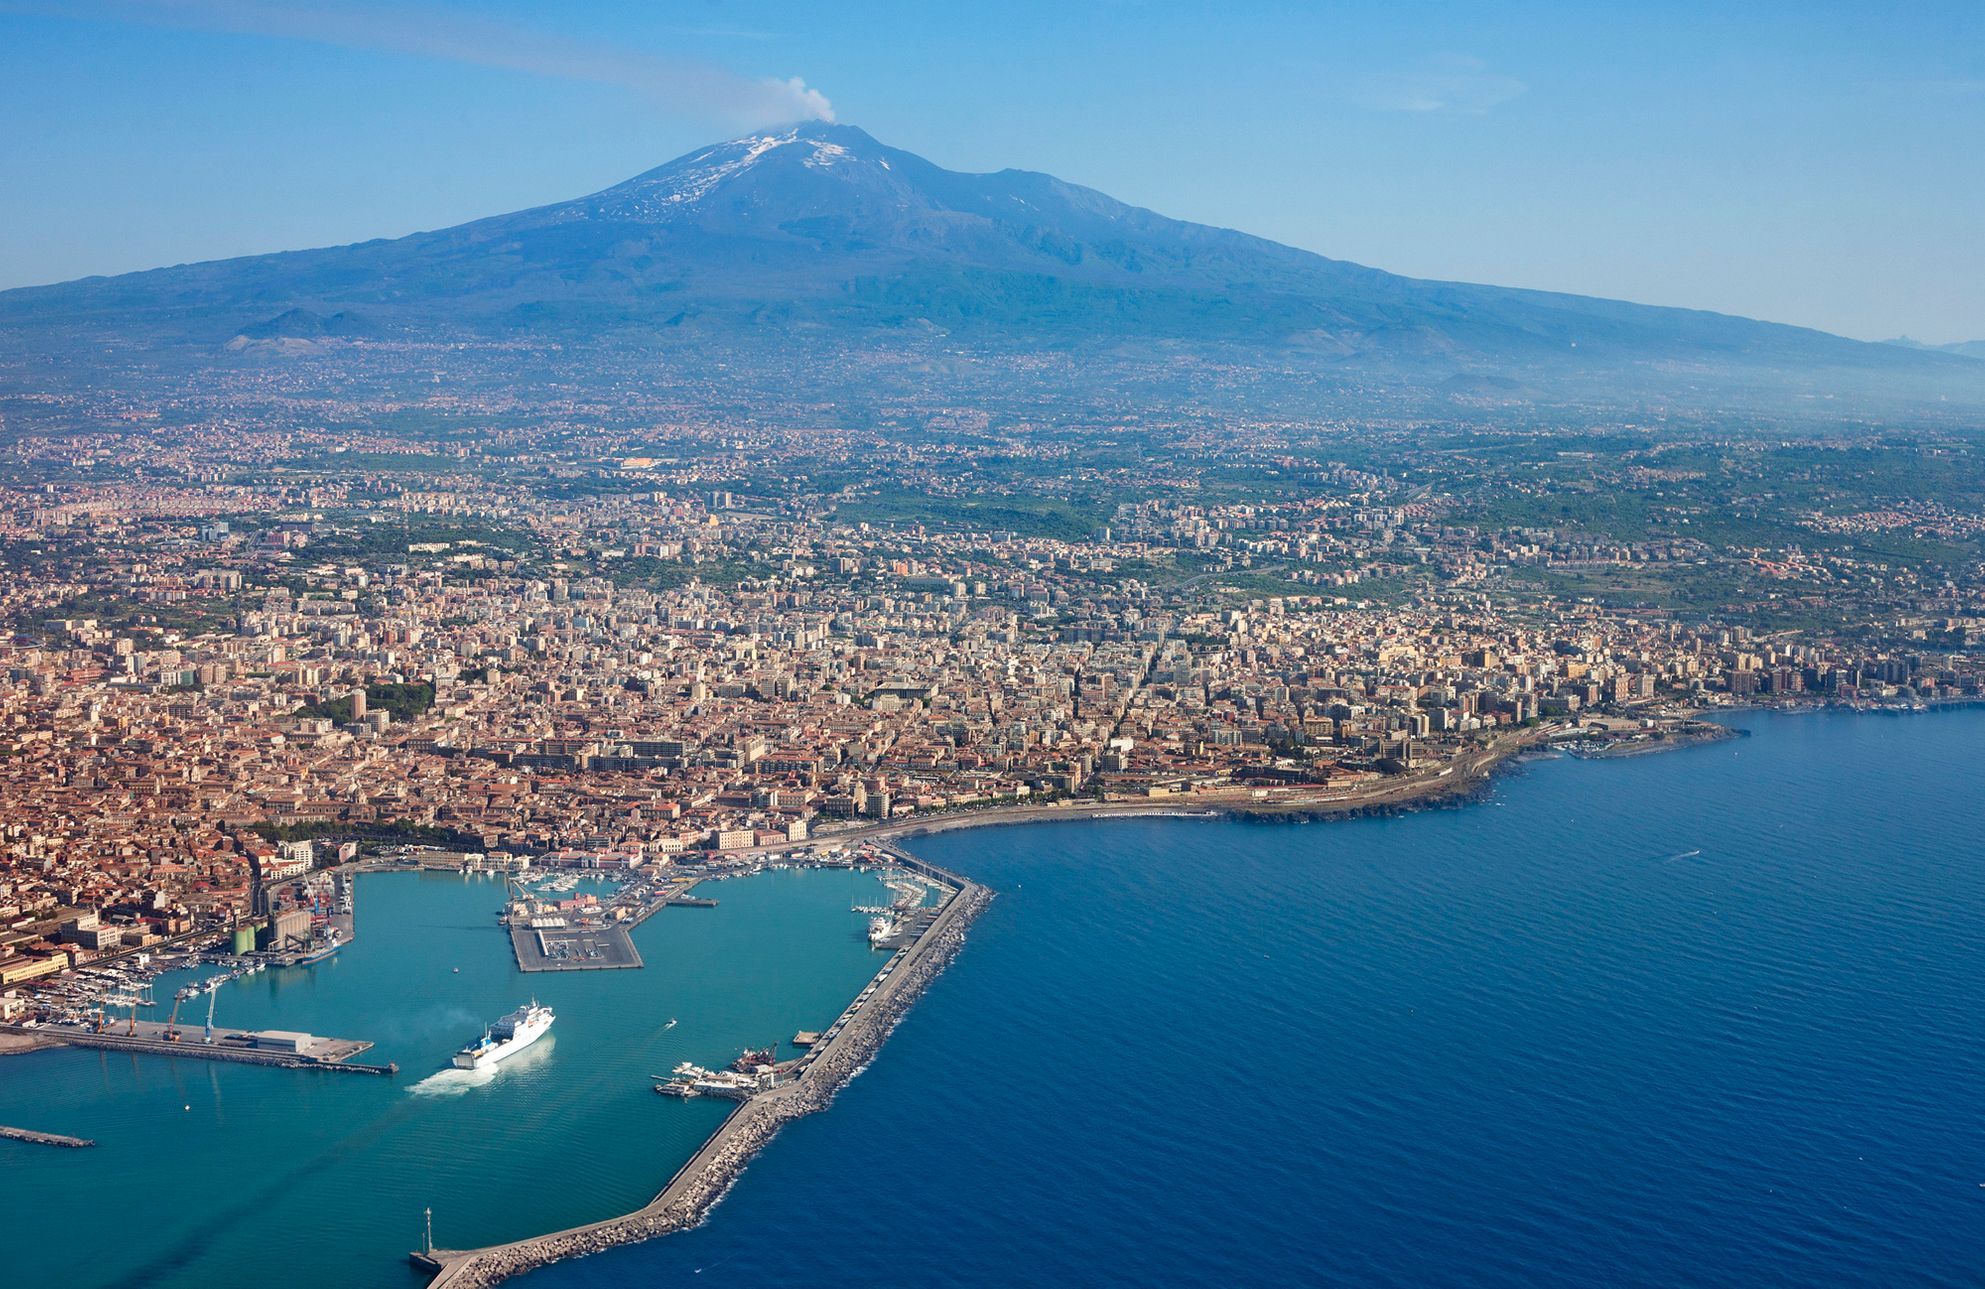 L’Etna è cresciuto di diverse decine di metri, misurano gli esperti.  Anche l’attività vulcanica è da biasimare